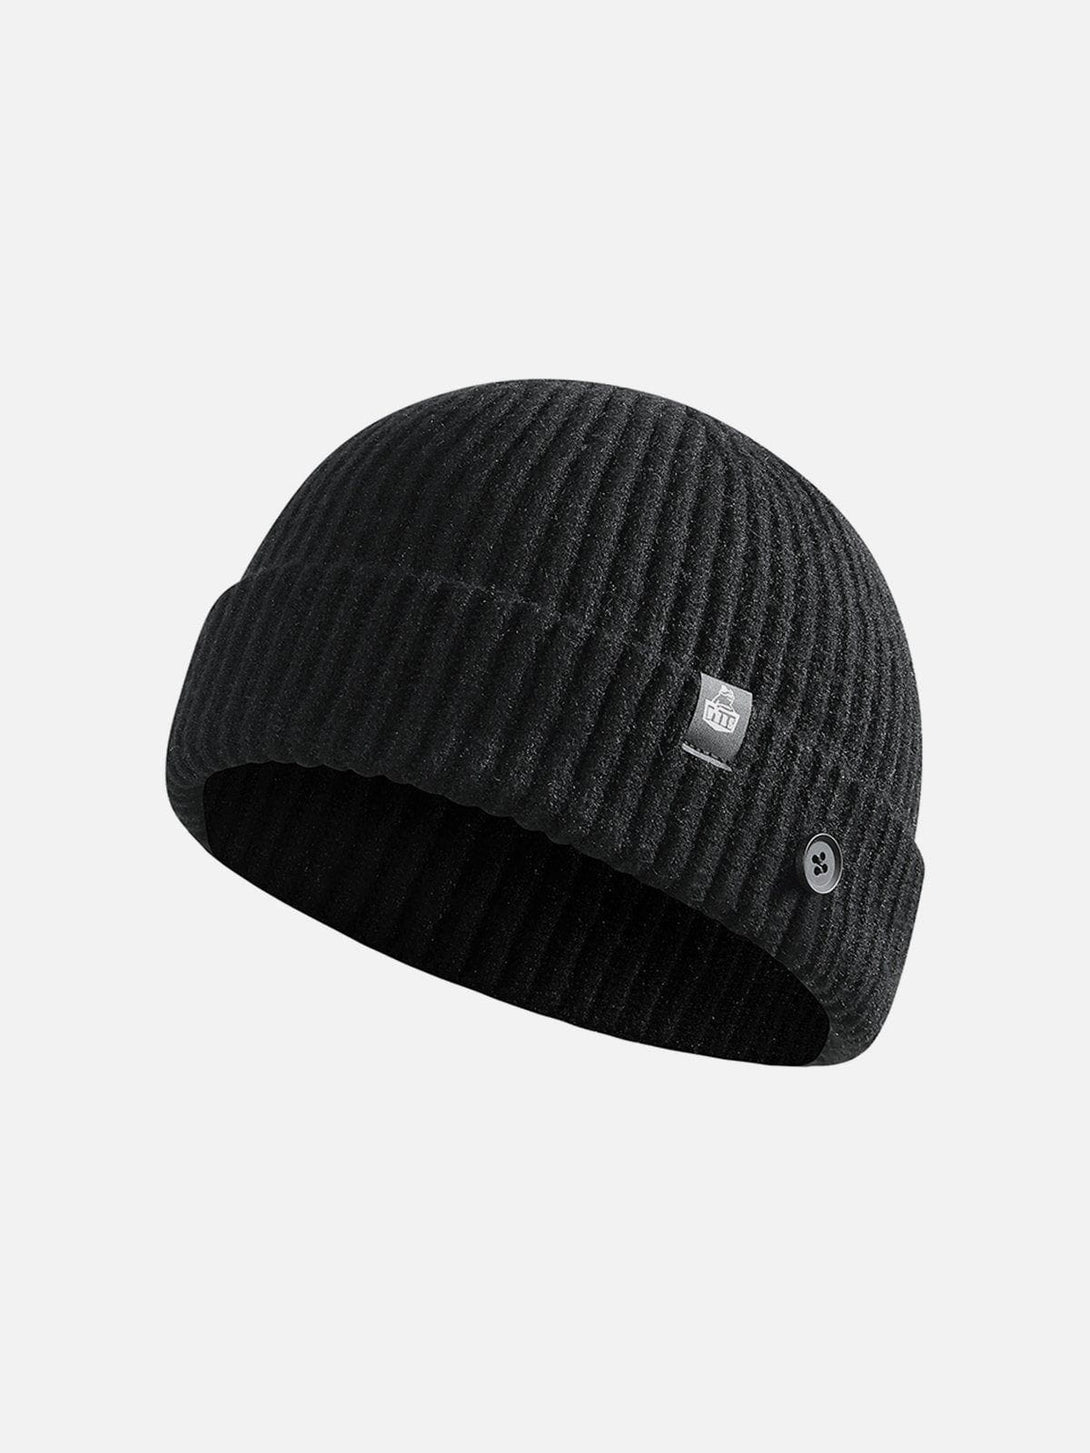 Majesda® - Buttons Knit Dome Hat- Outfit Ideas - Streetwear Fashion - majesda.com